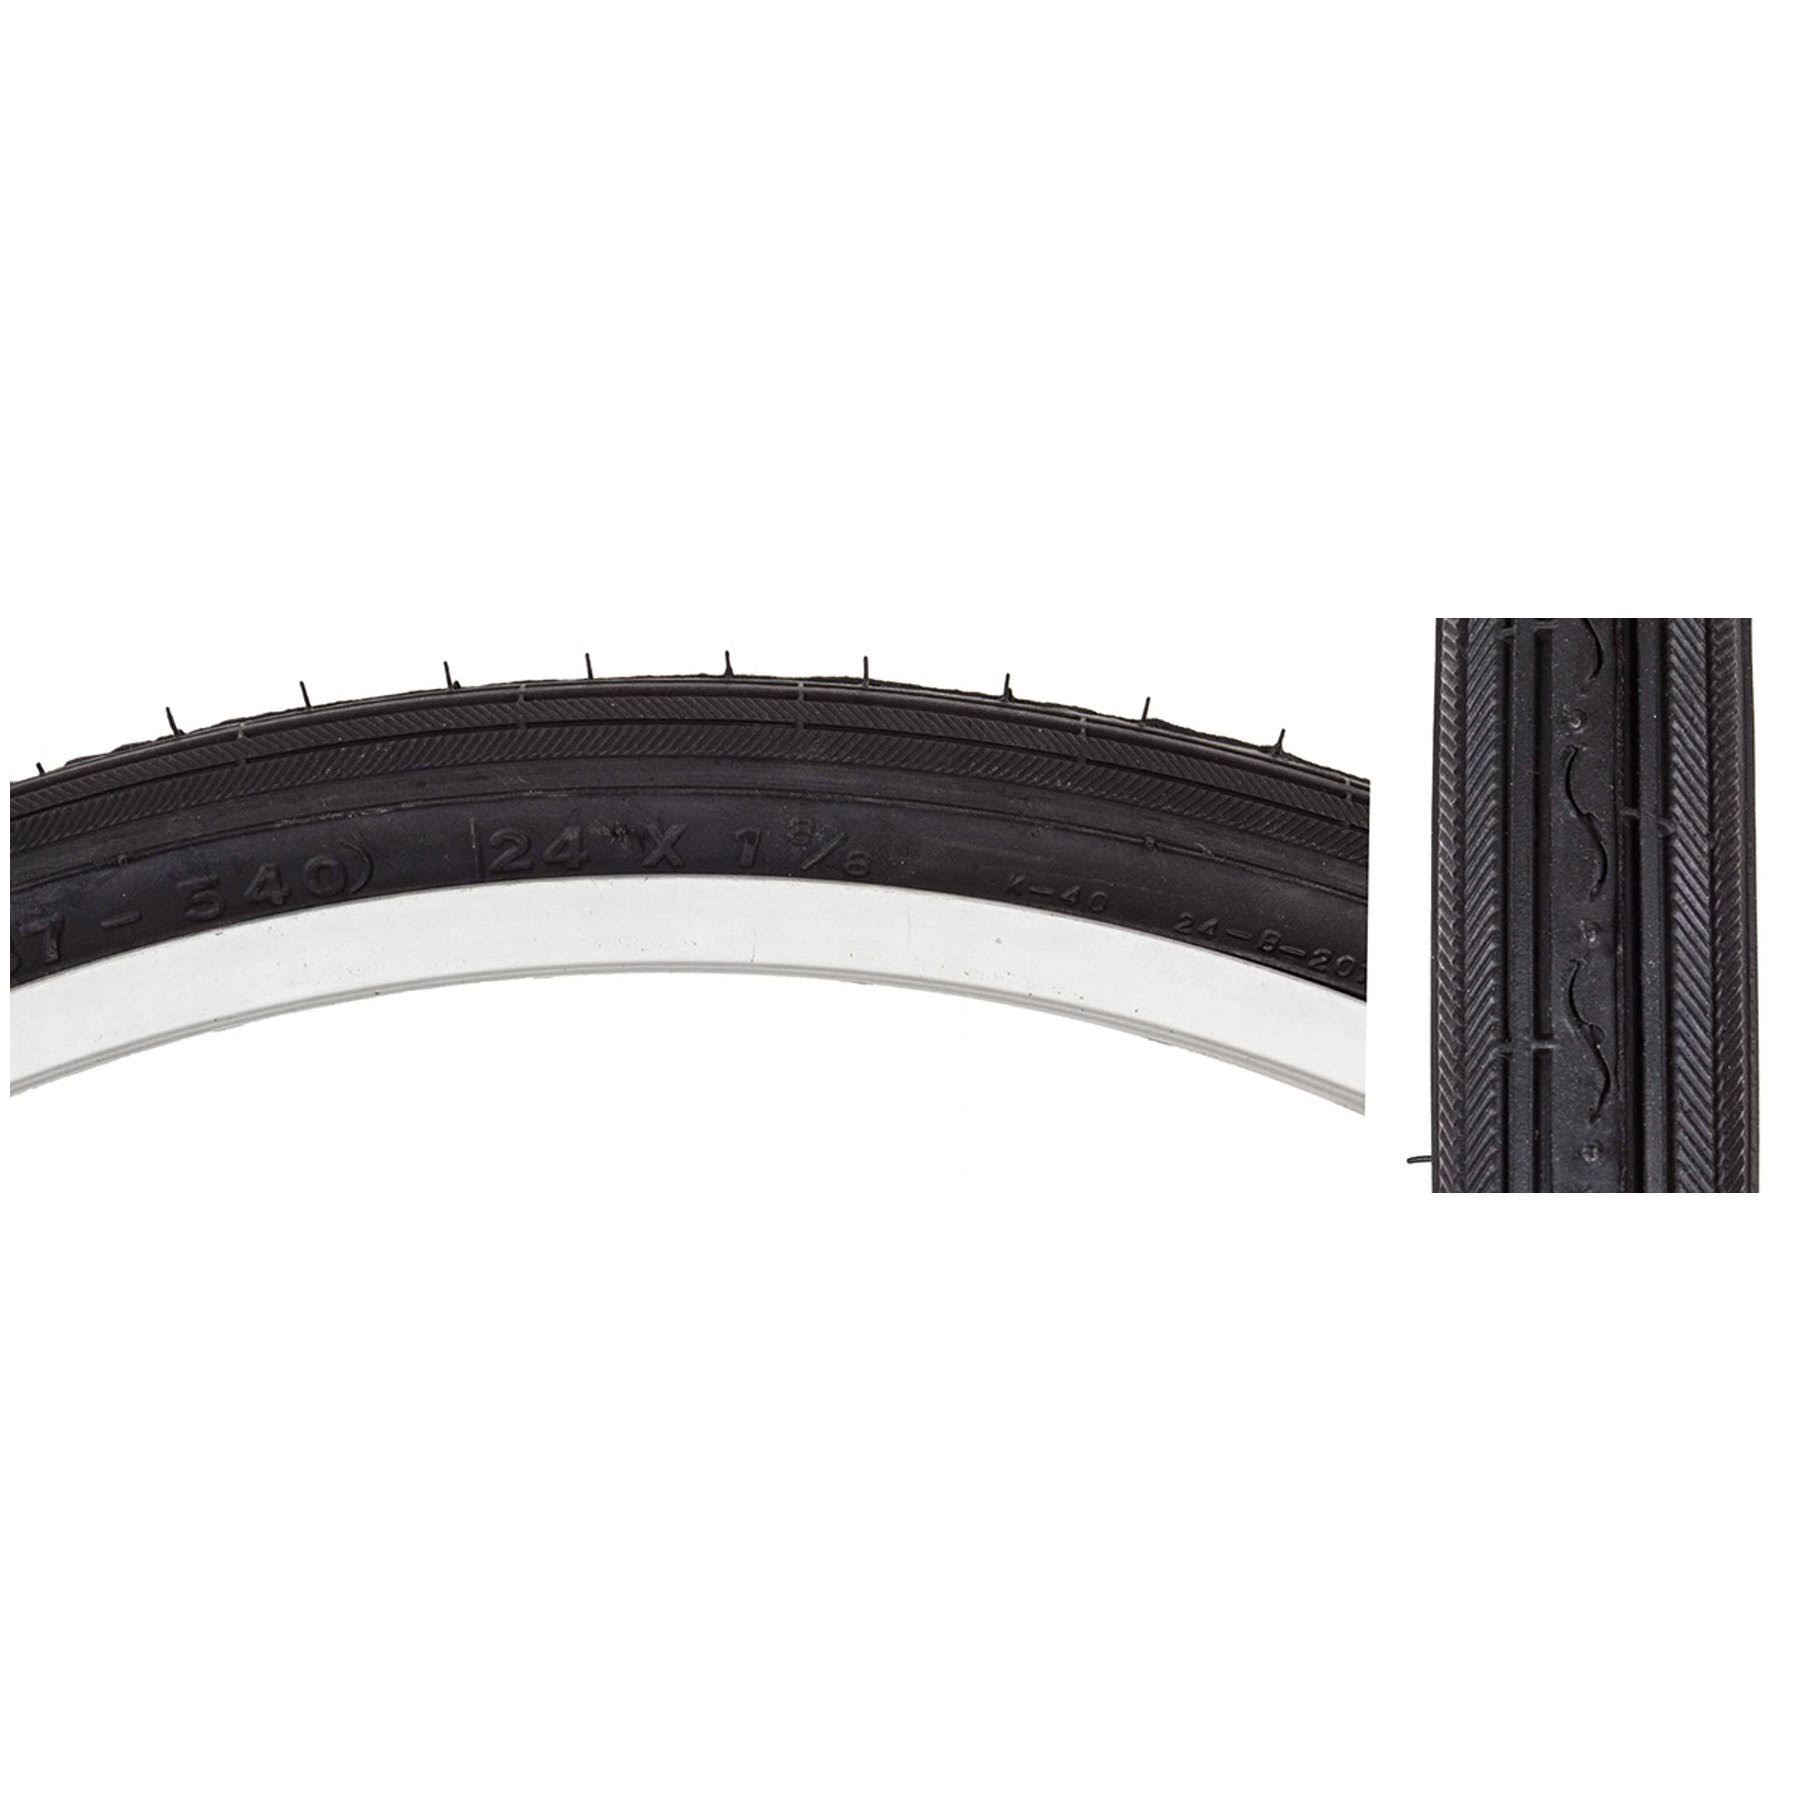 Sunlite Road Tires - Black and Black, 24 x 1-3/8"